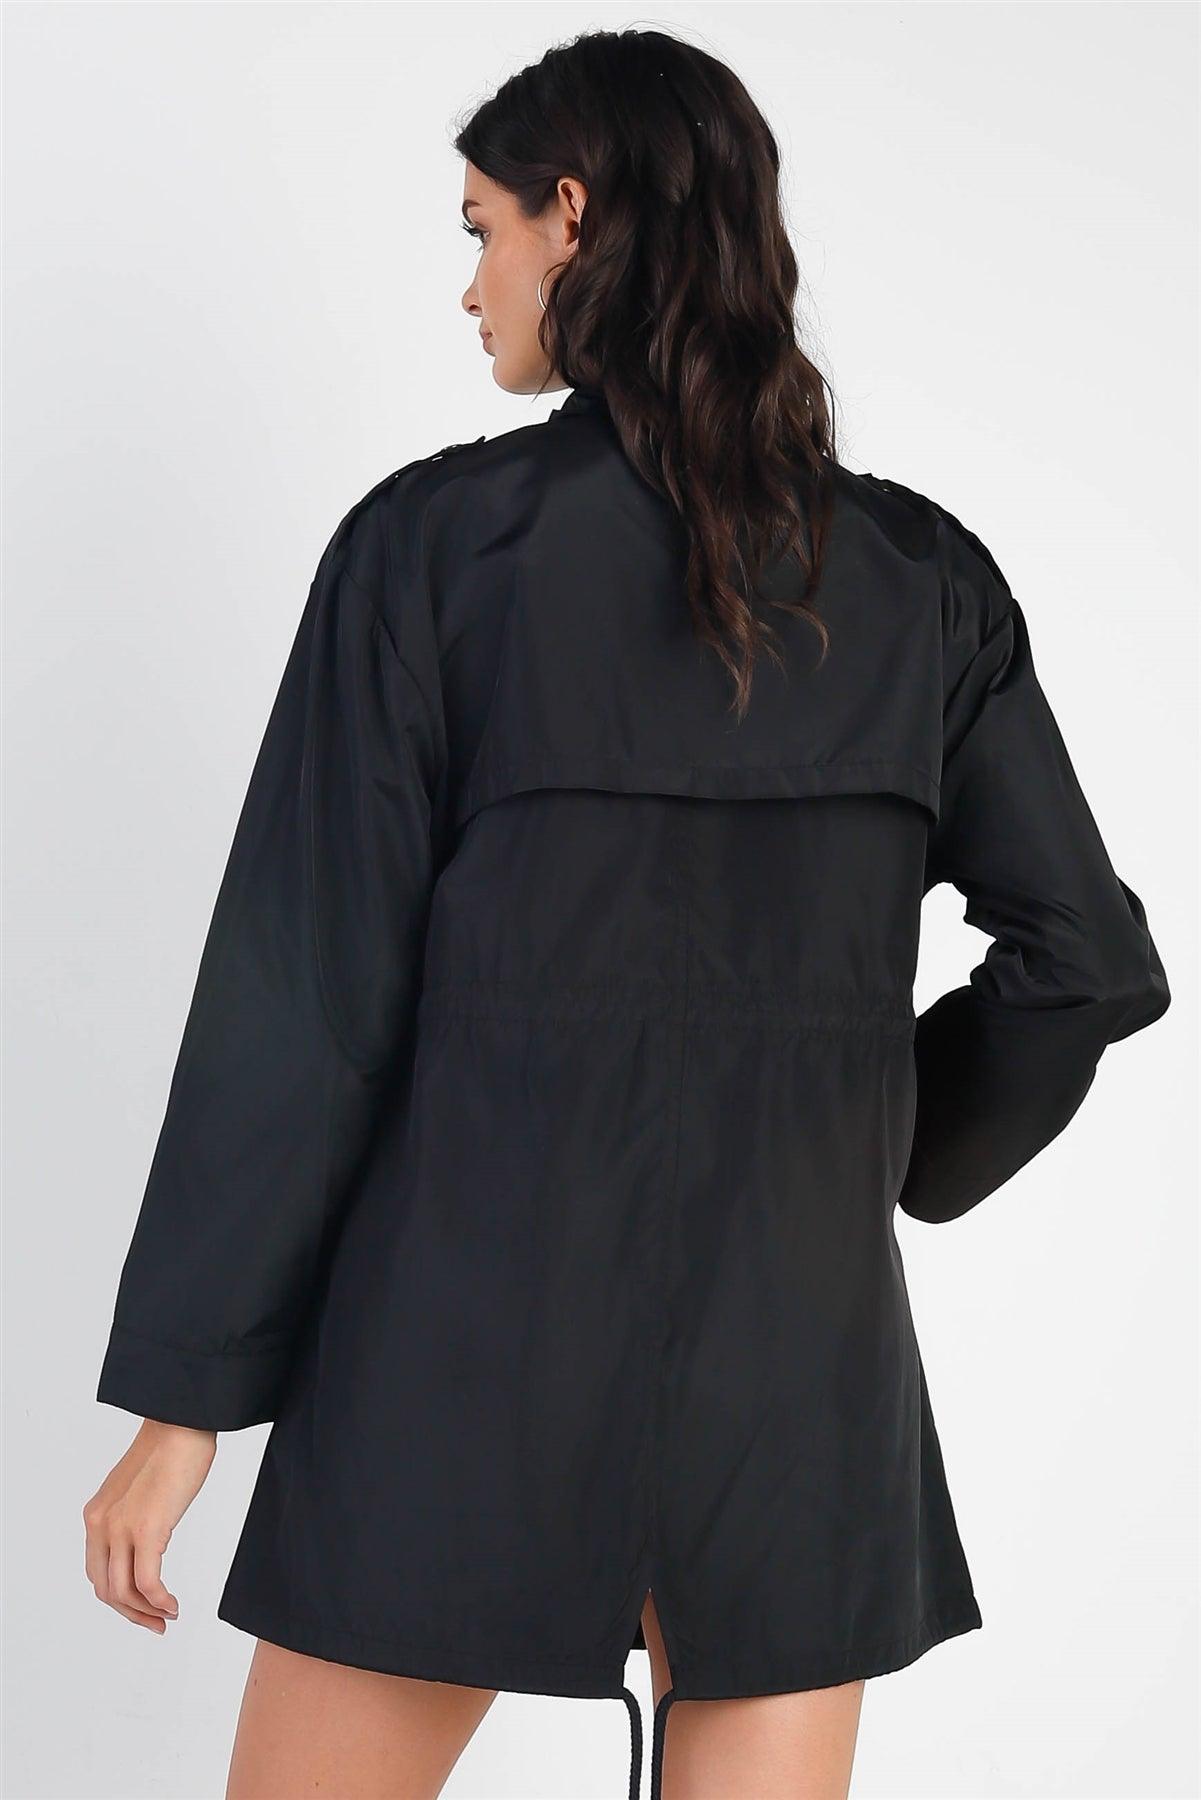 Black Glossy Drawstring Trim Button-Down Coach Rain Coat Jacket /2-2-2